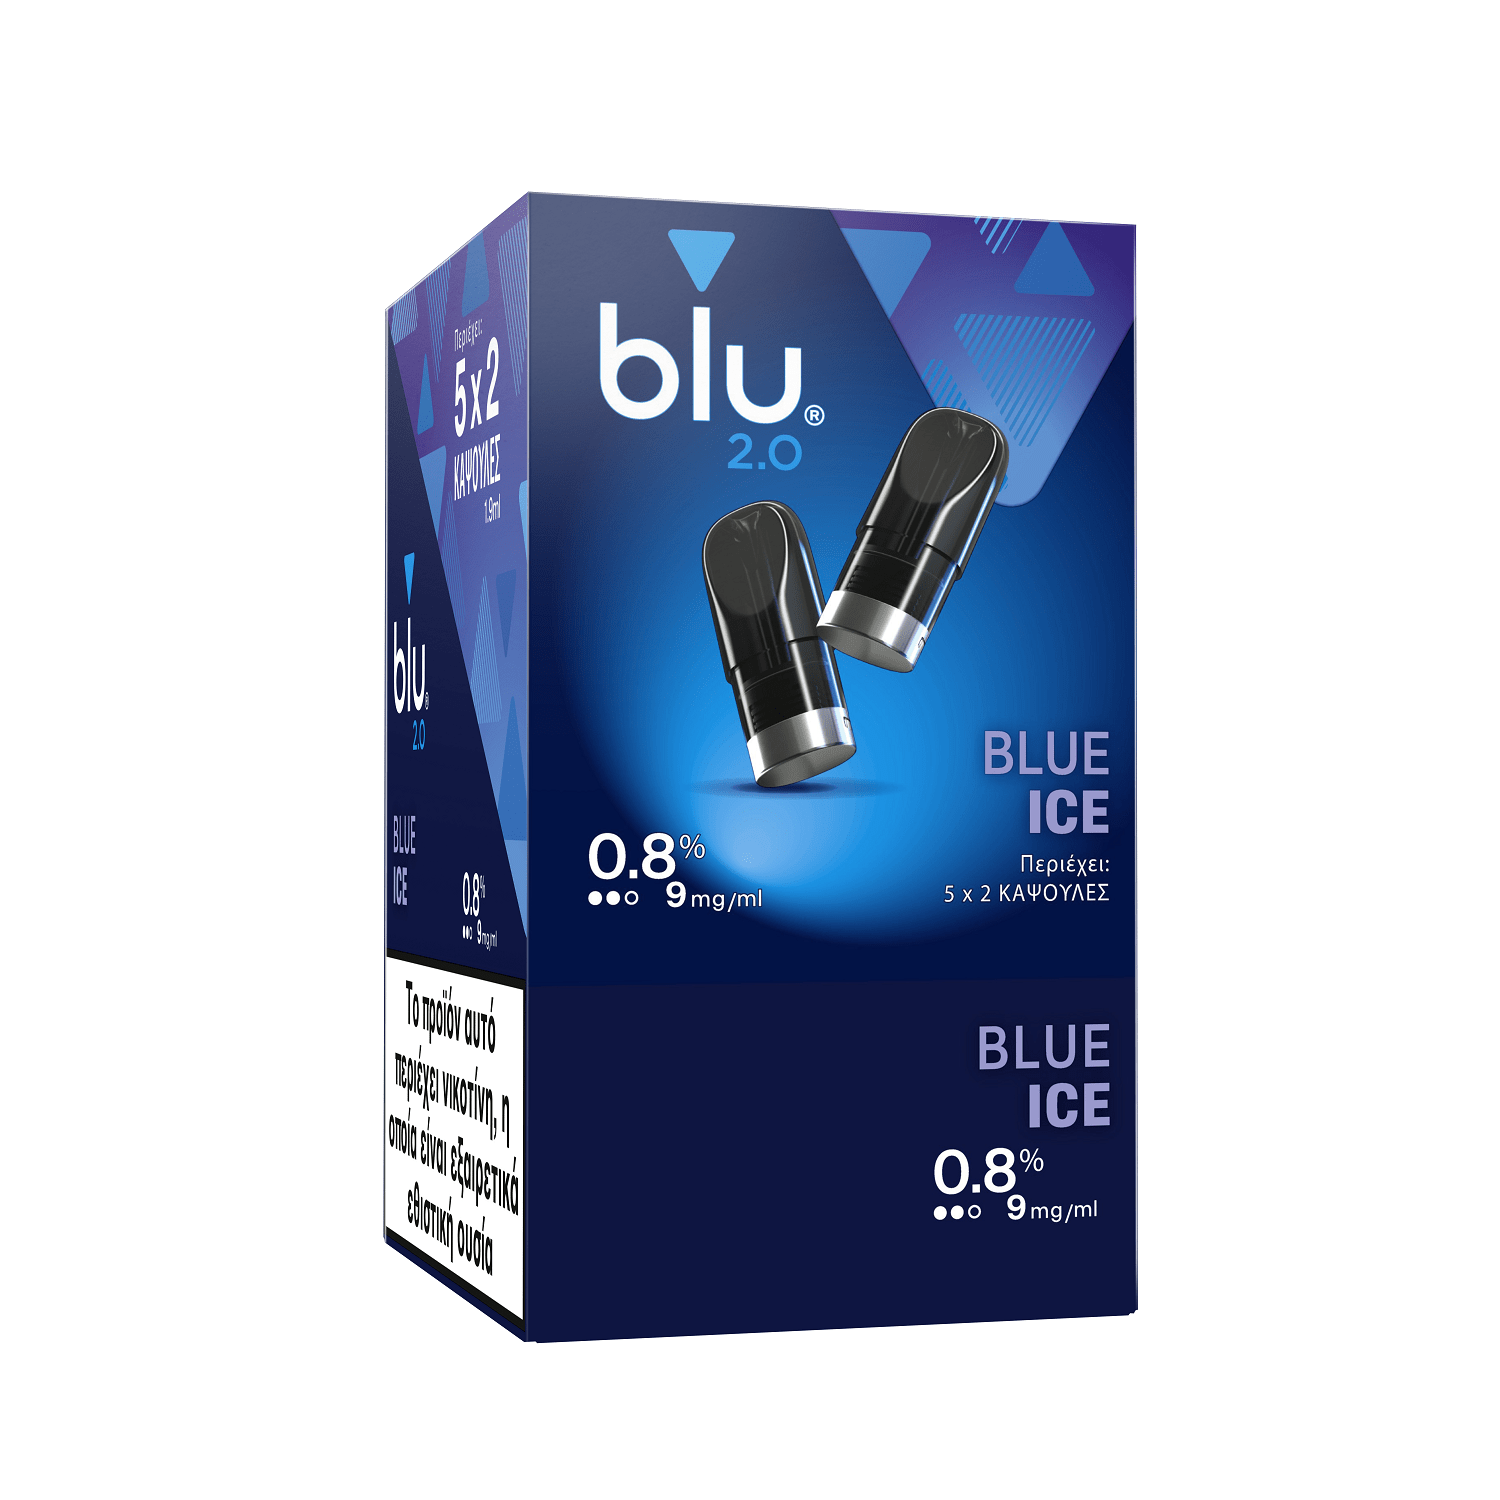 BLU 2.0 CAPSULES BLUE ICE - usaheatproduct.store